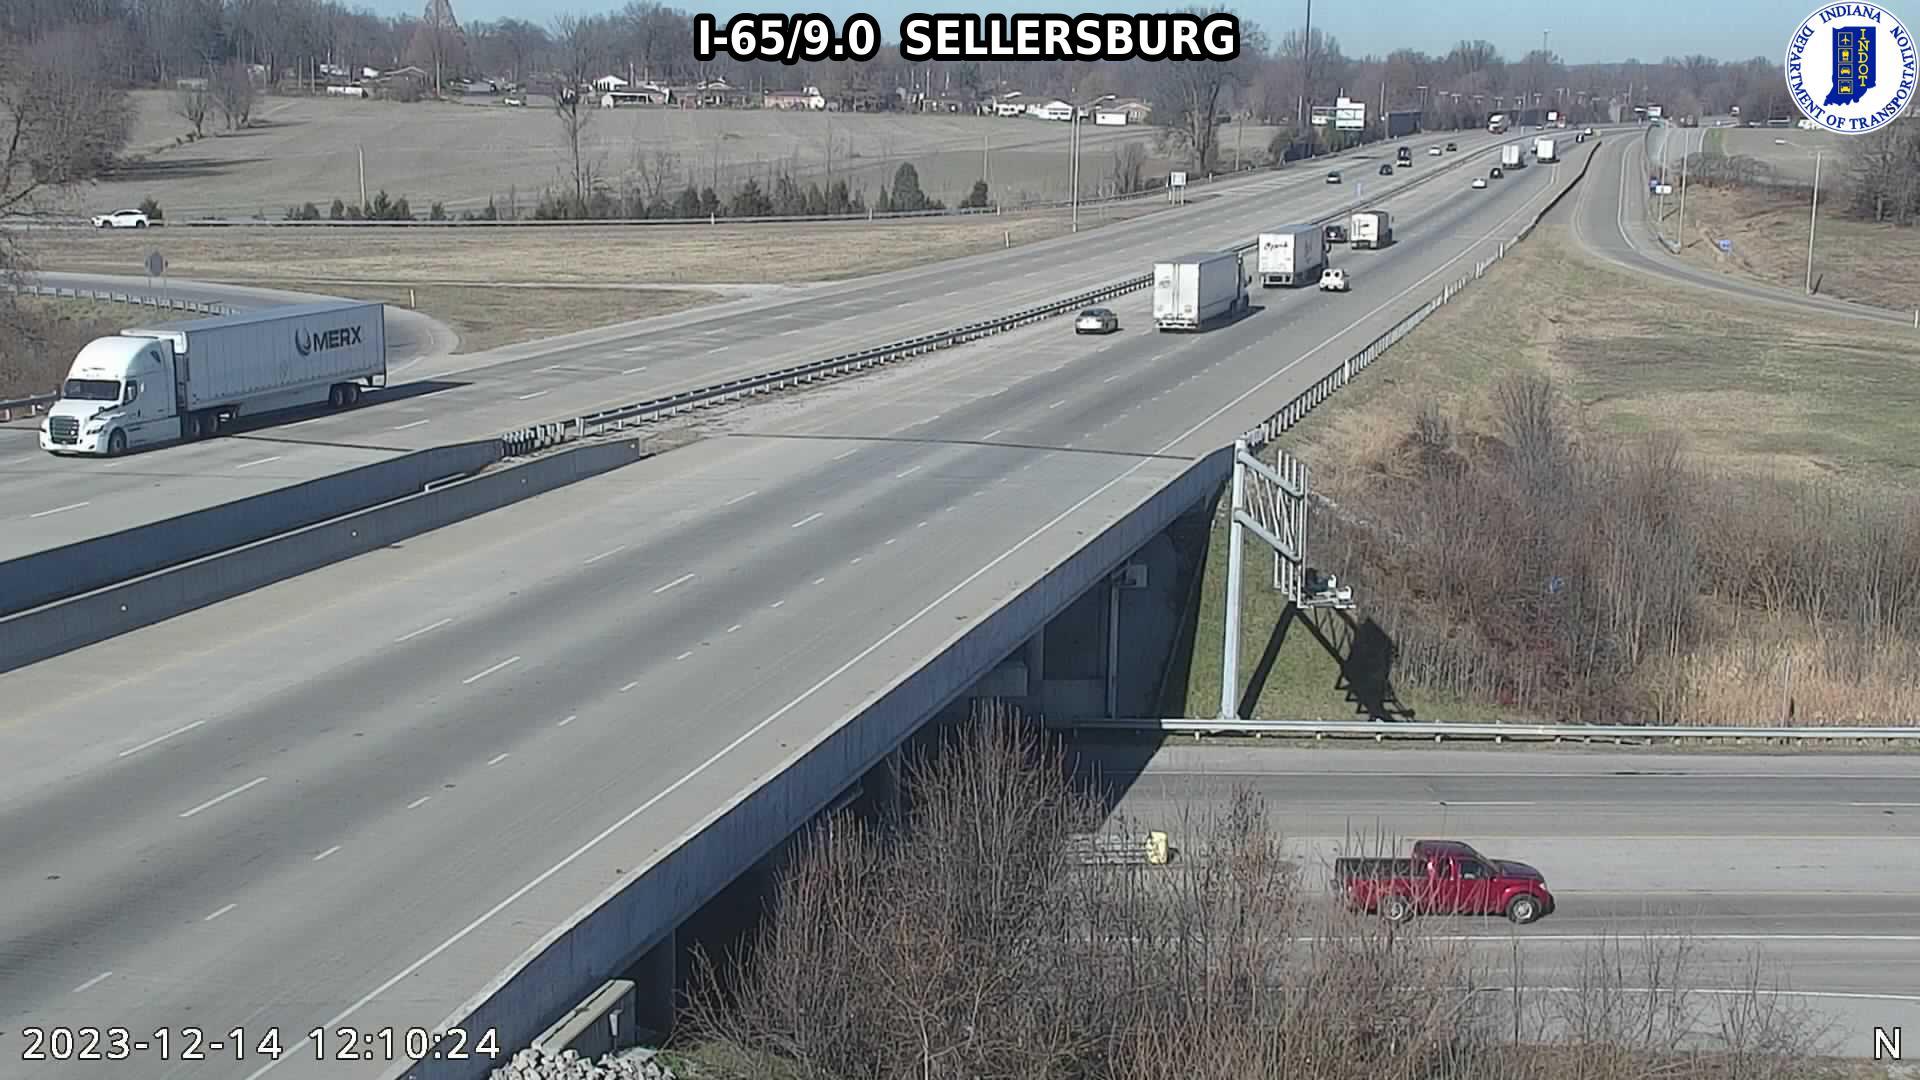 Traffic Cam Sellersburg: I-65: I-65/9.0 - I-65/9.0